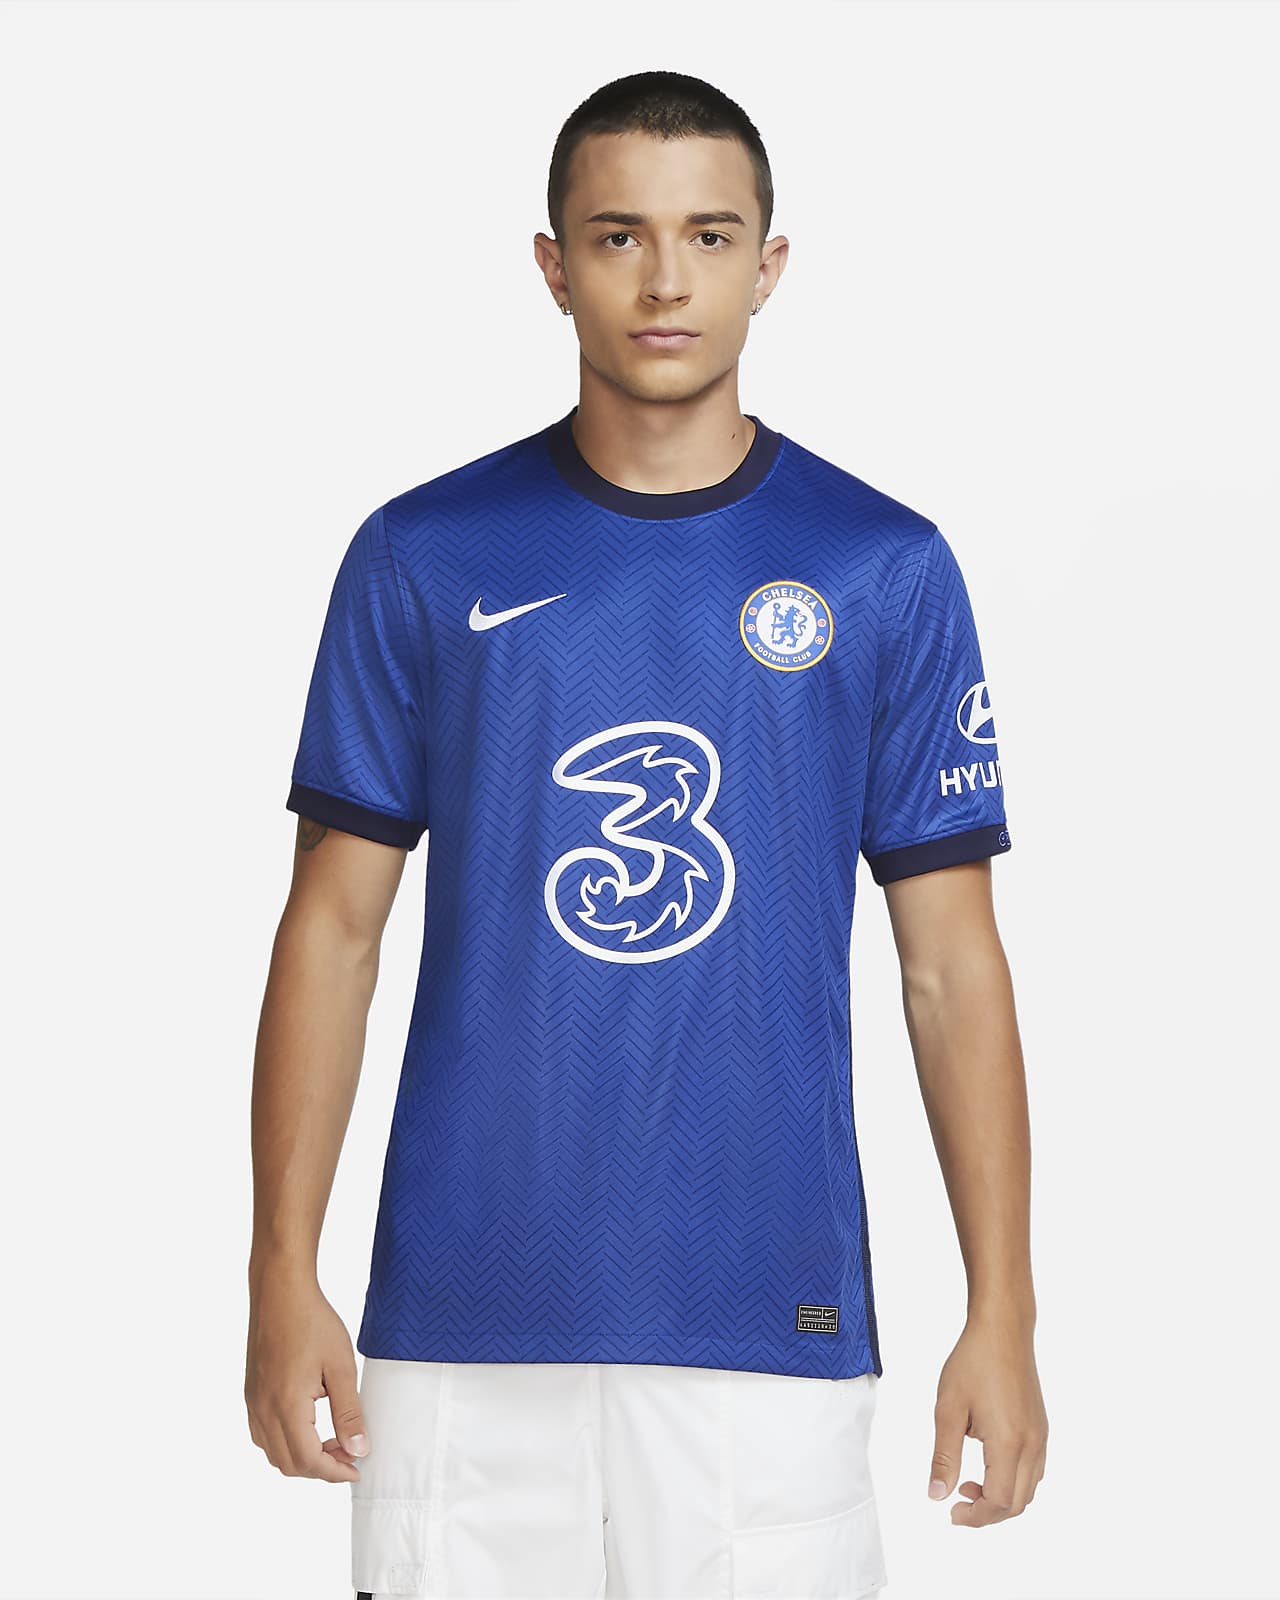 Camiseta de fútbol de local para hombre Stadium del Chelsea FC 2020/21. Nike .com